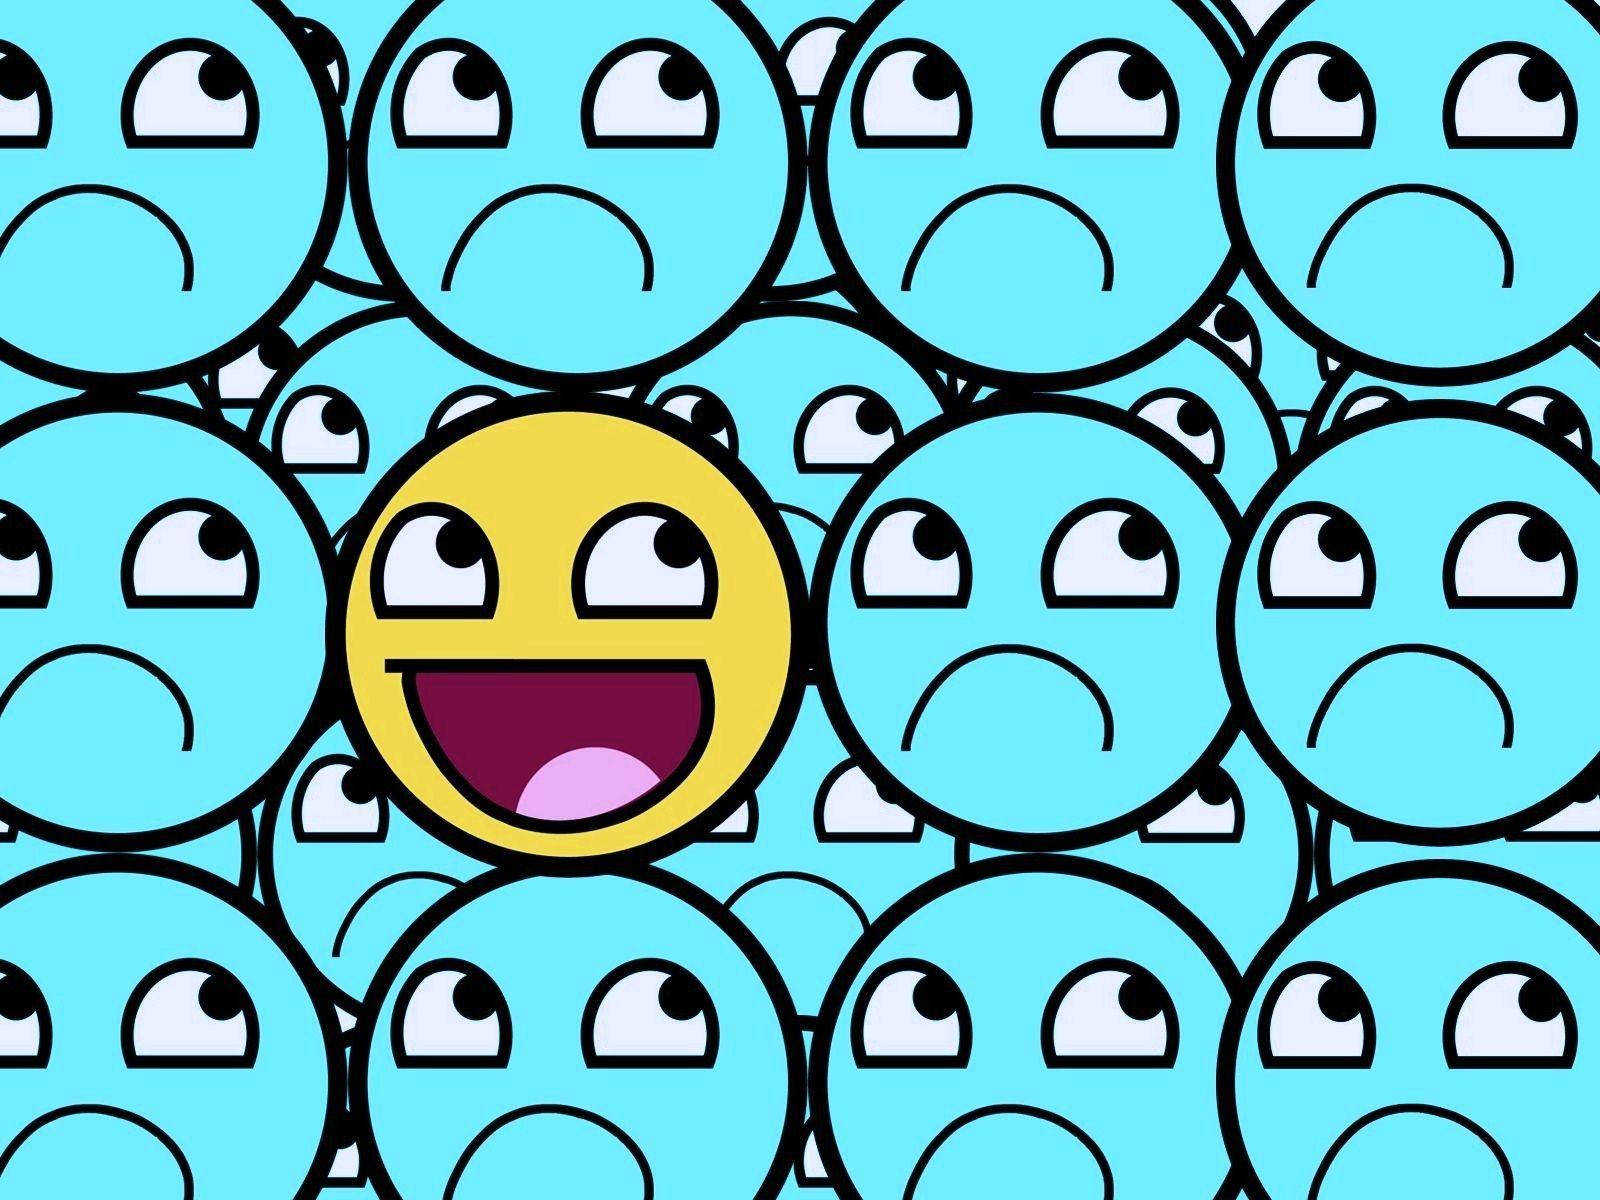 Sad Emojis And A Happy Face Wallpaper